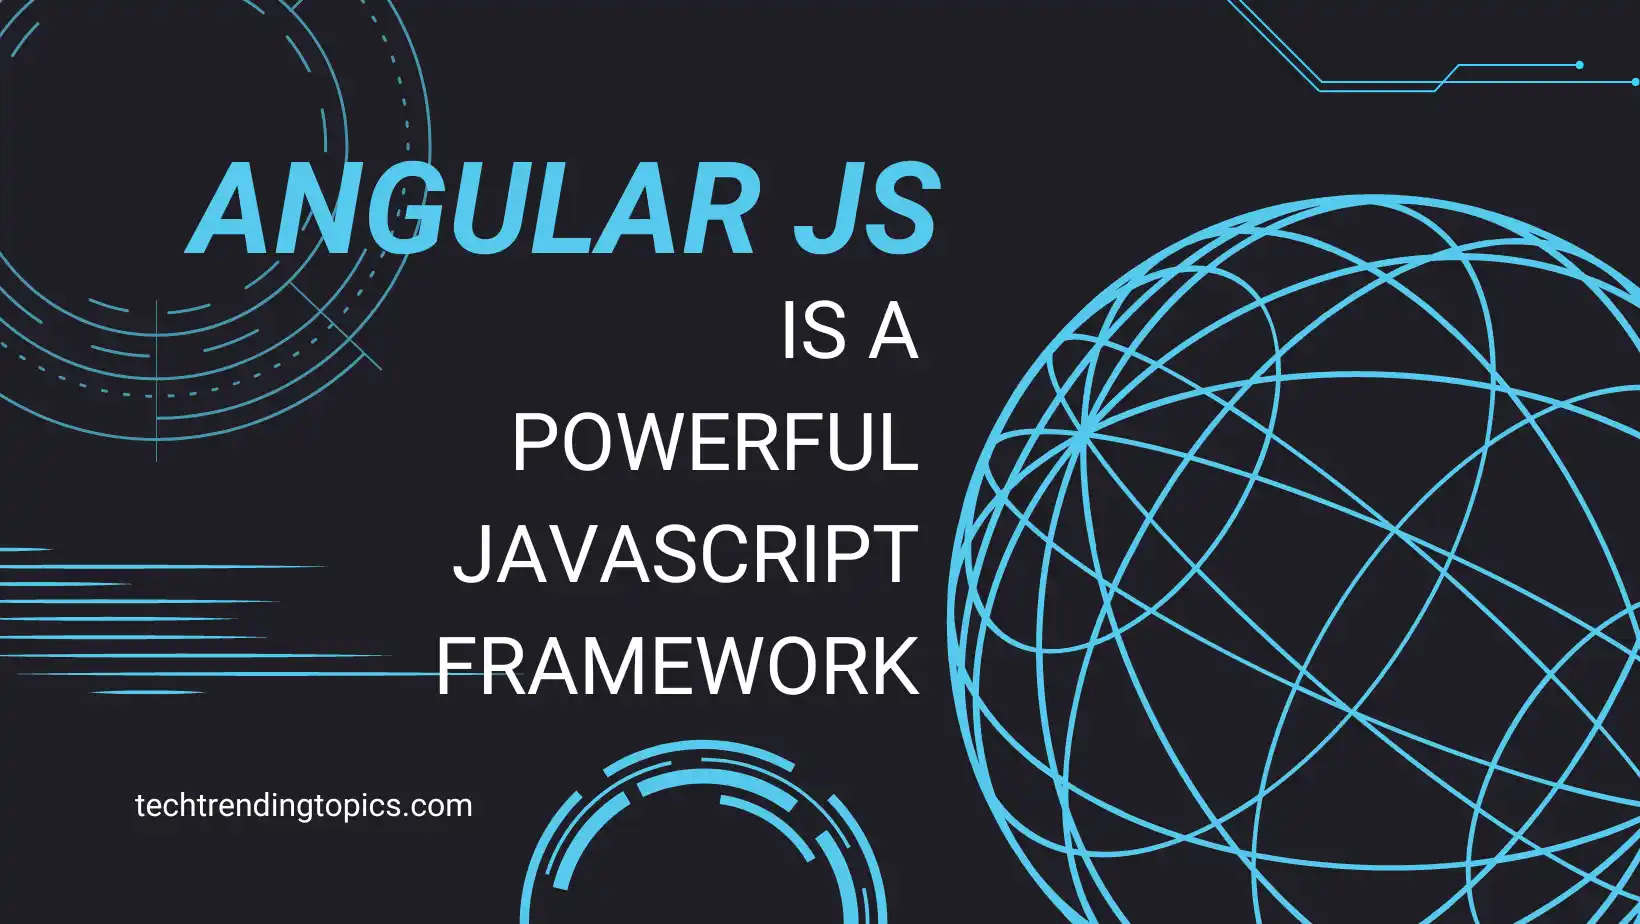 Angular JS is a powerful JavaScript Framework